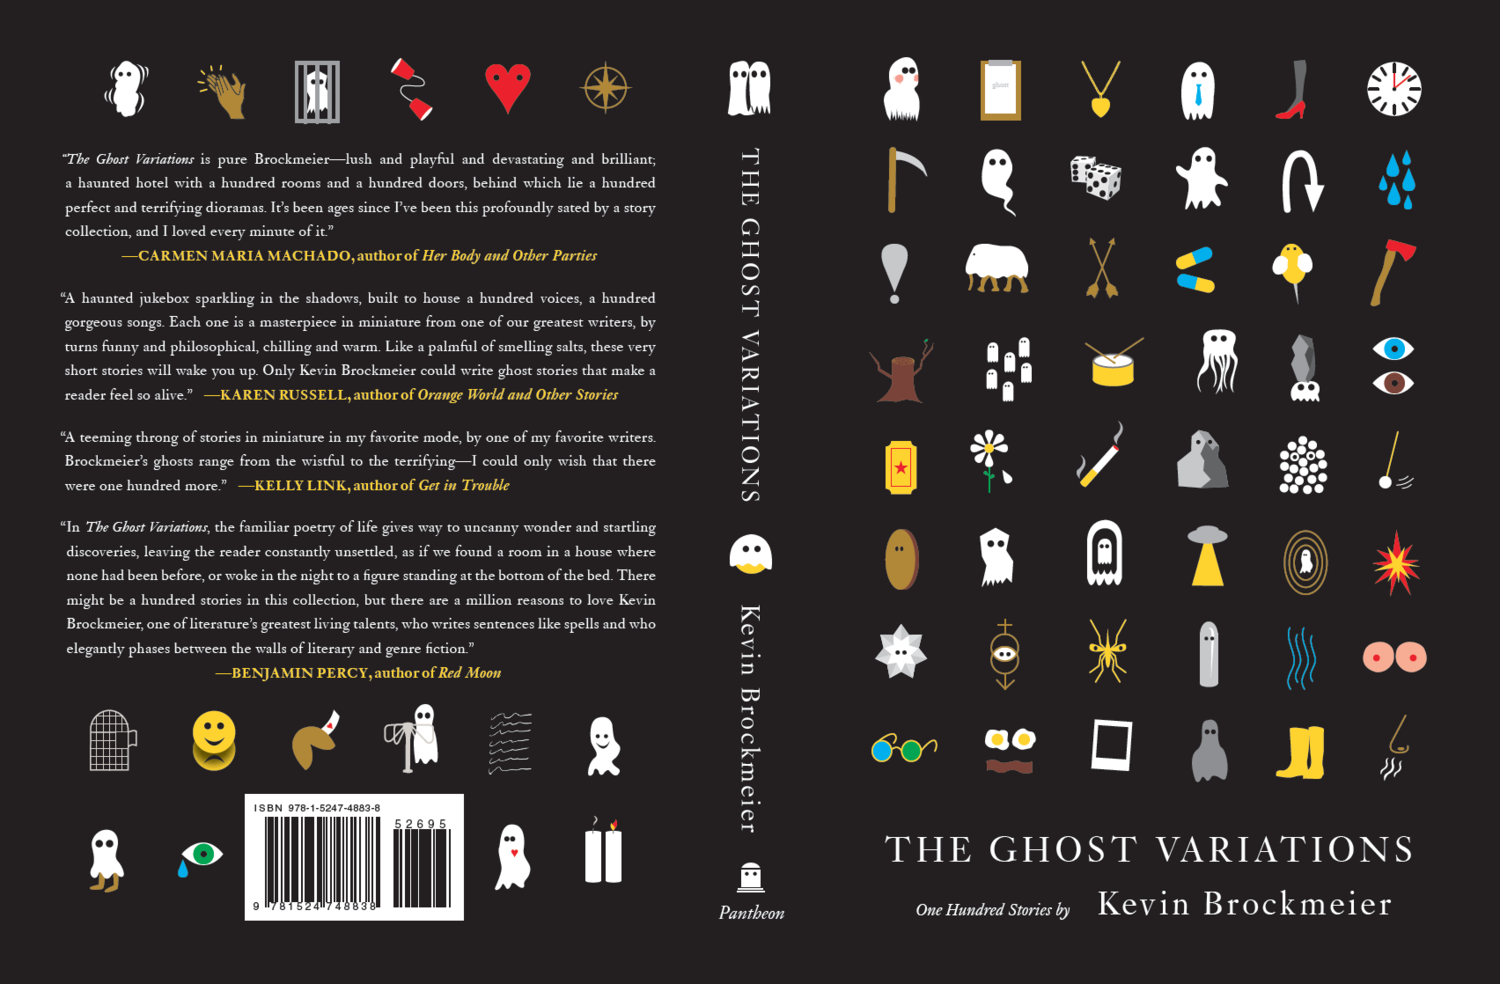 The Ghost Variations — Kevin Brockmeier